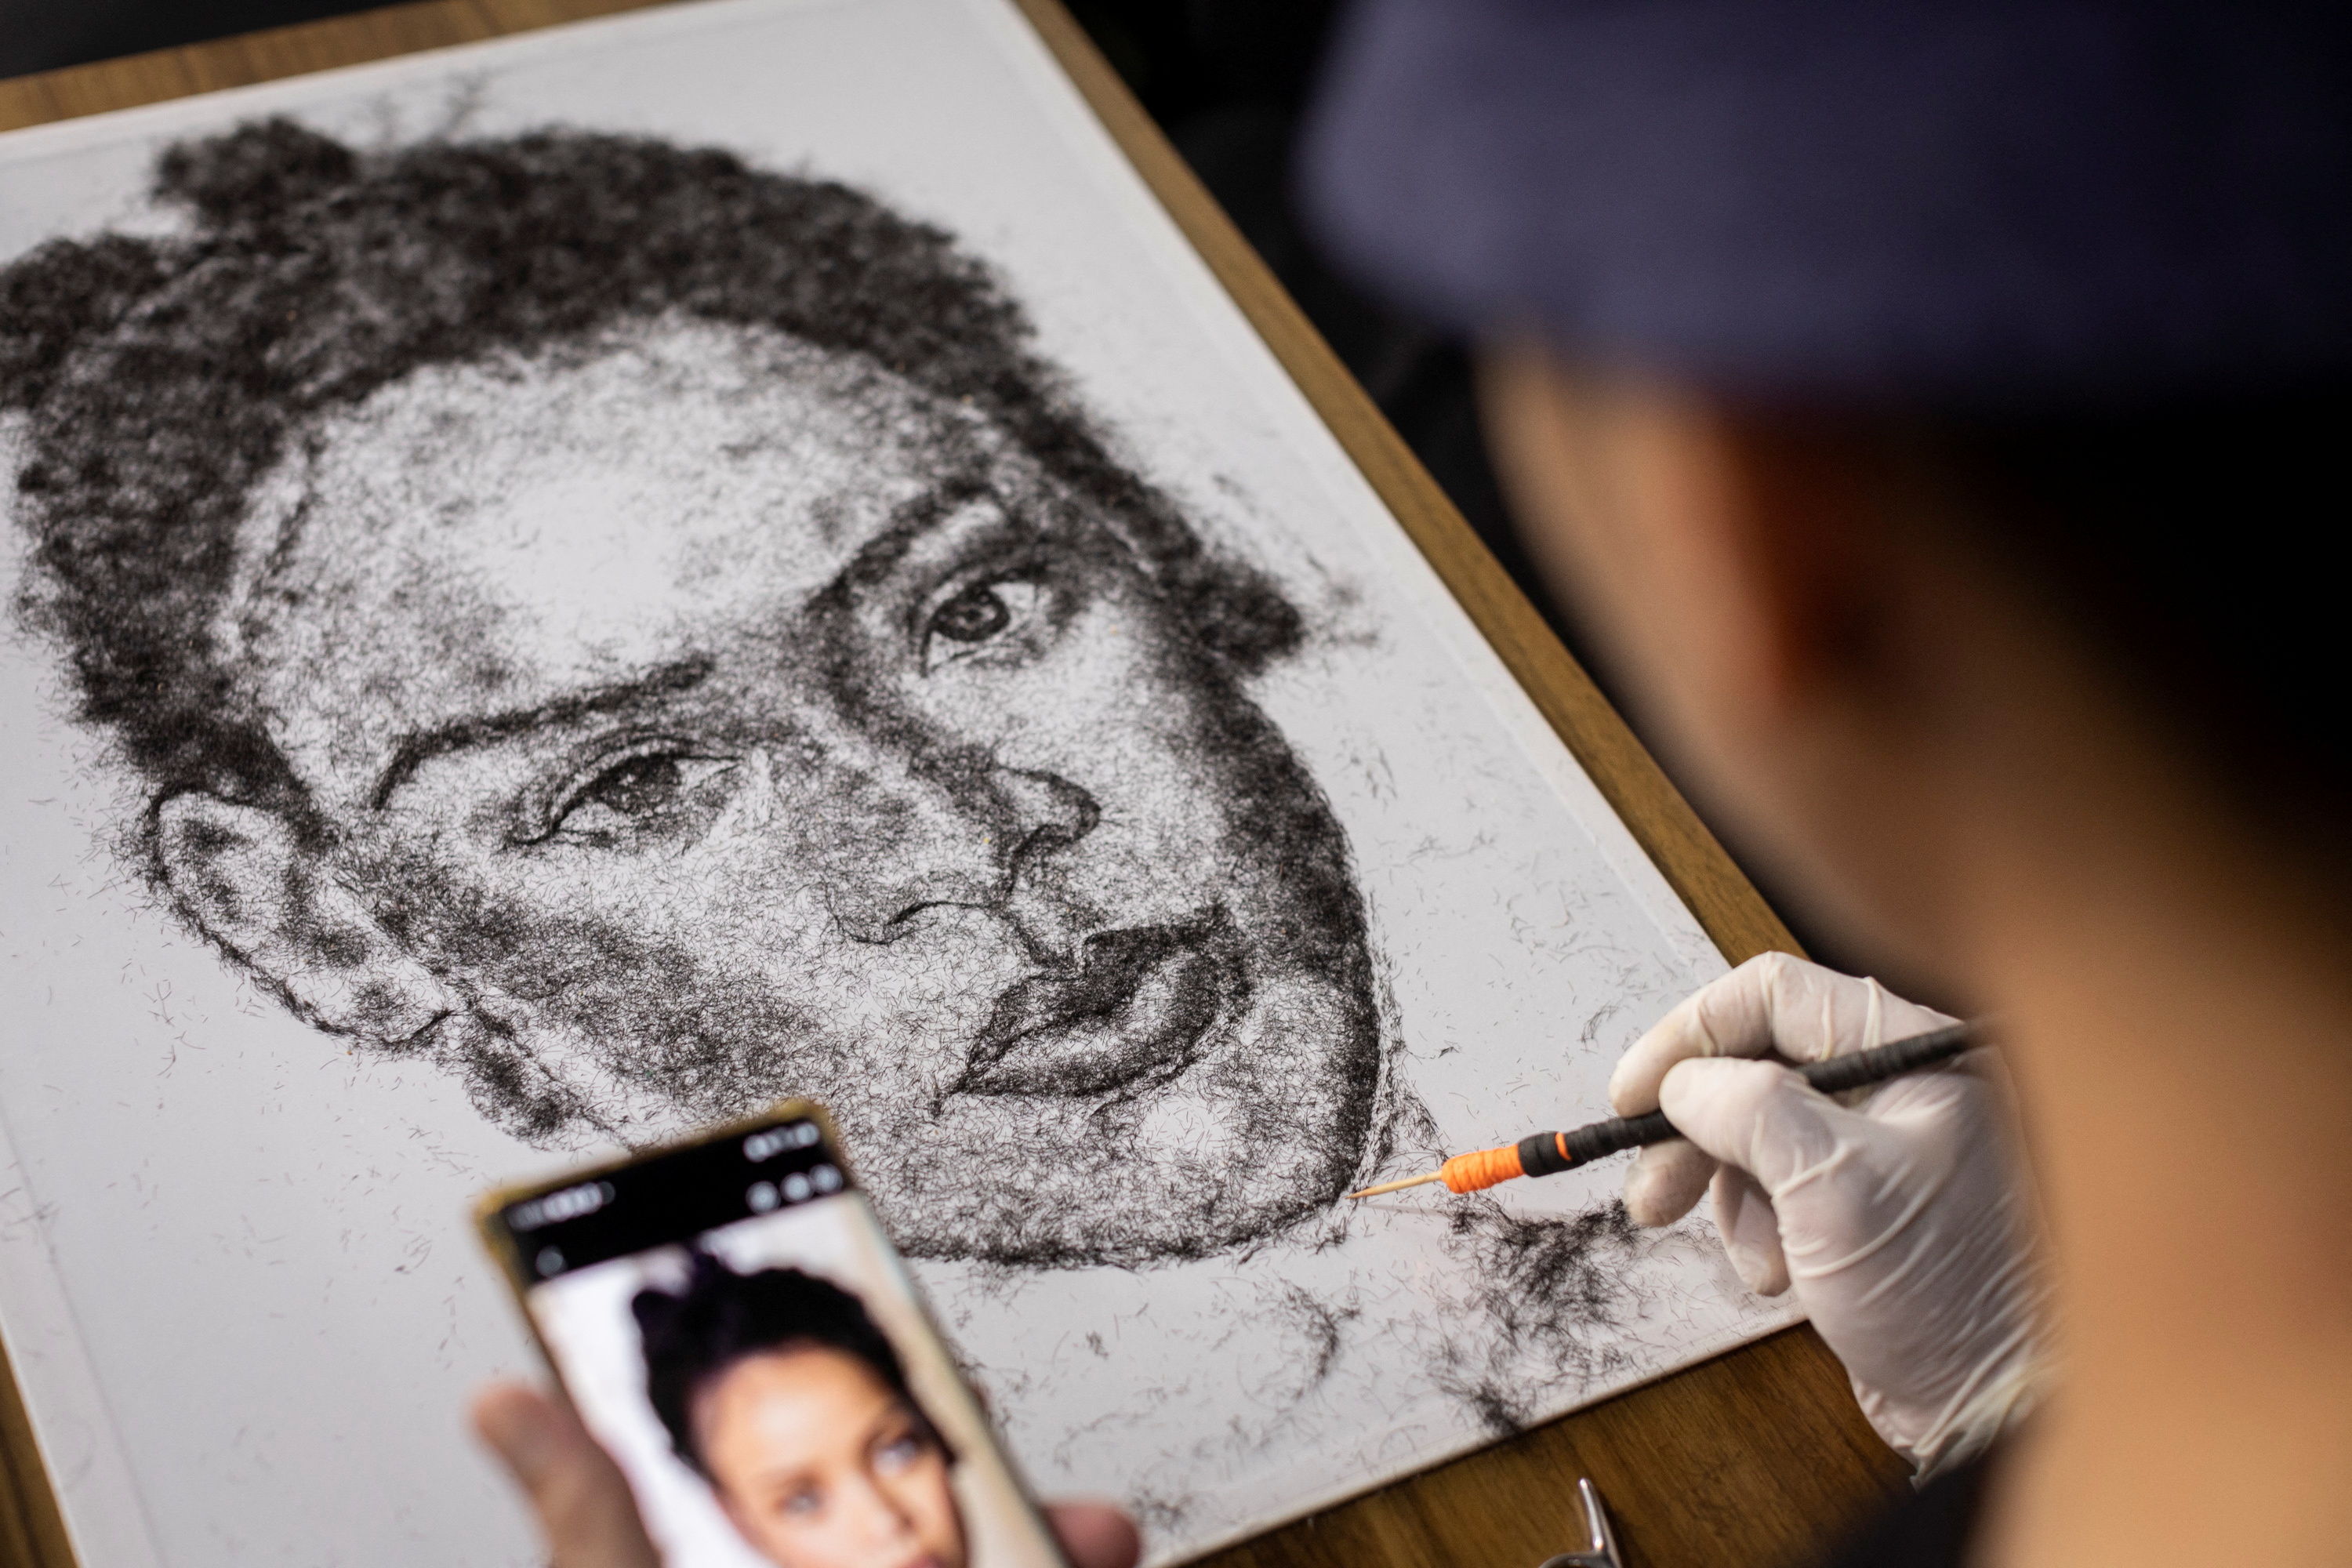 A hairy idea: Filipino artist uses own hair to create portraits